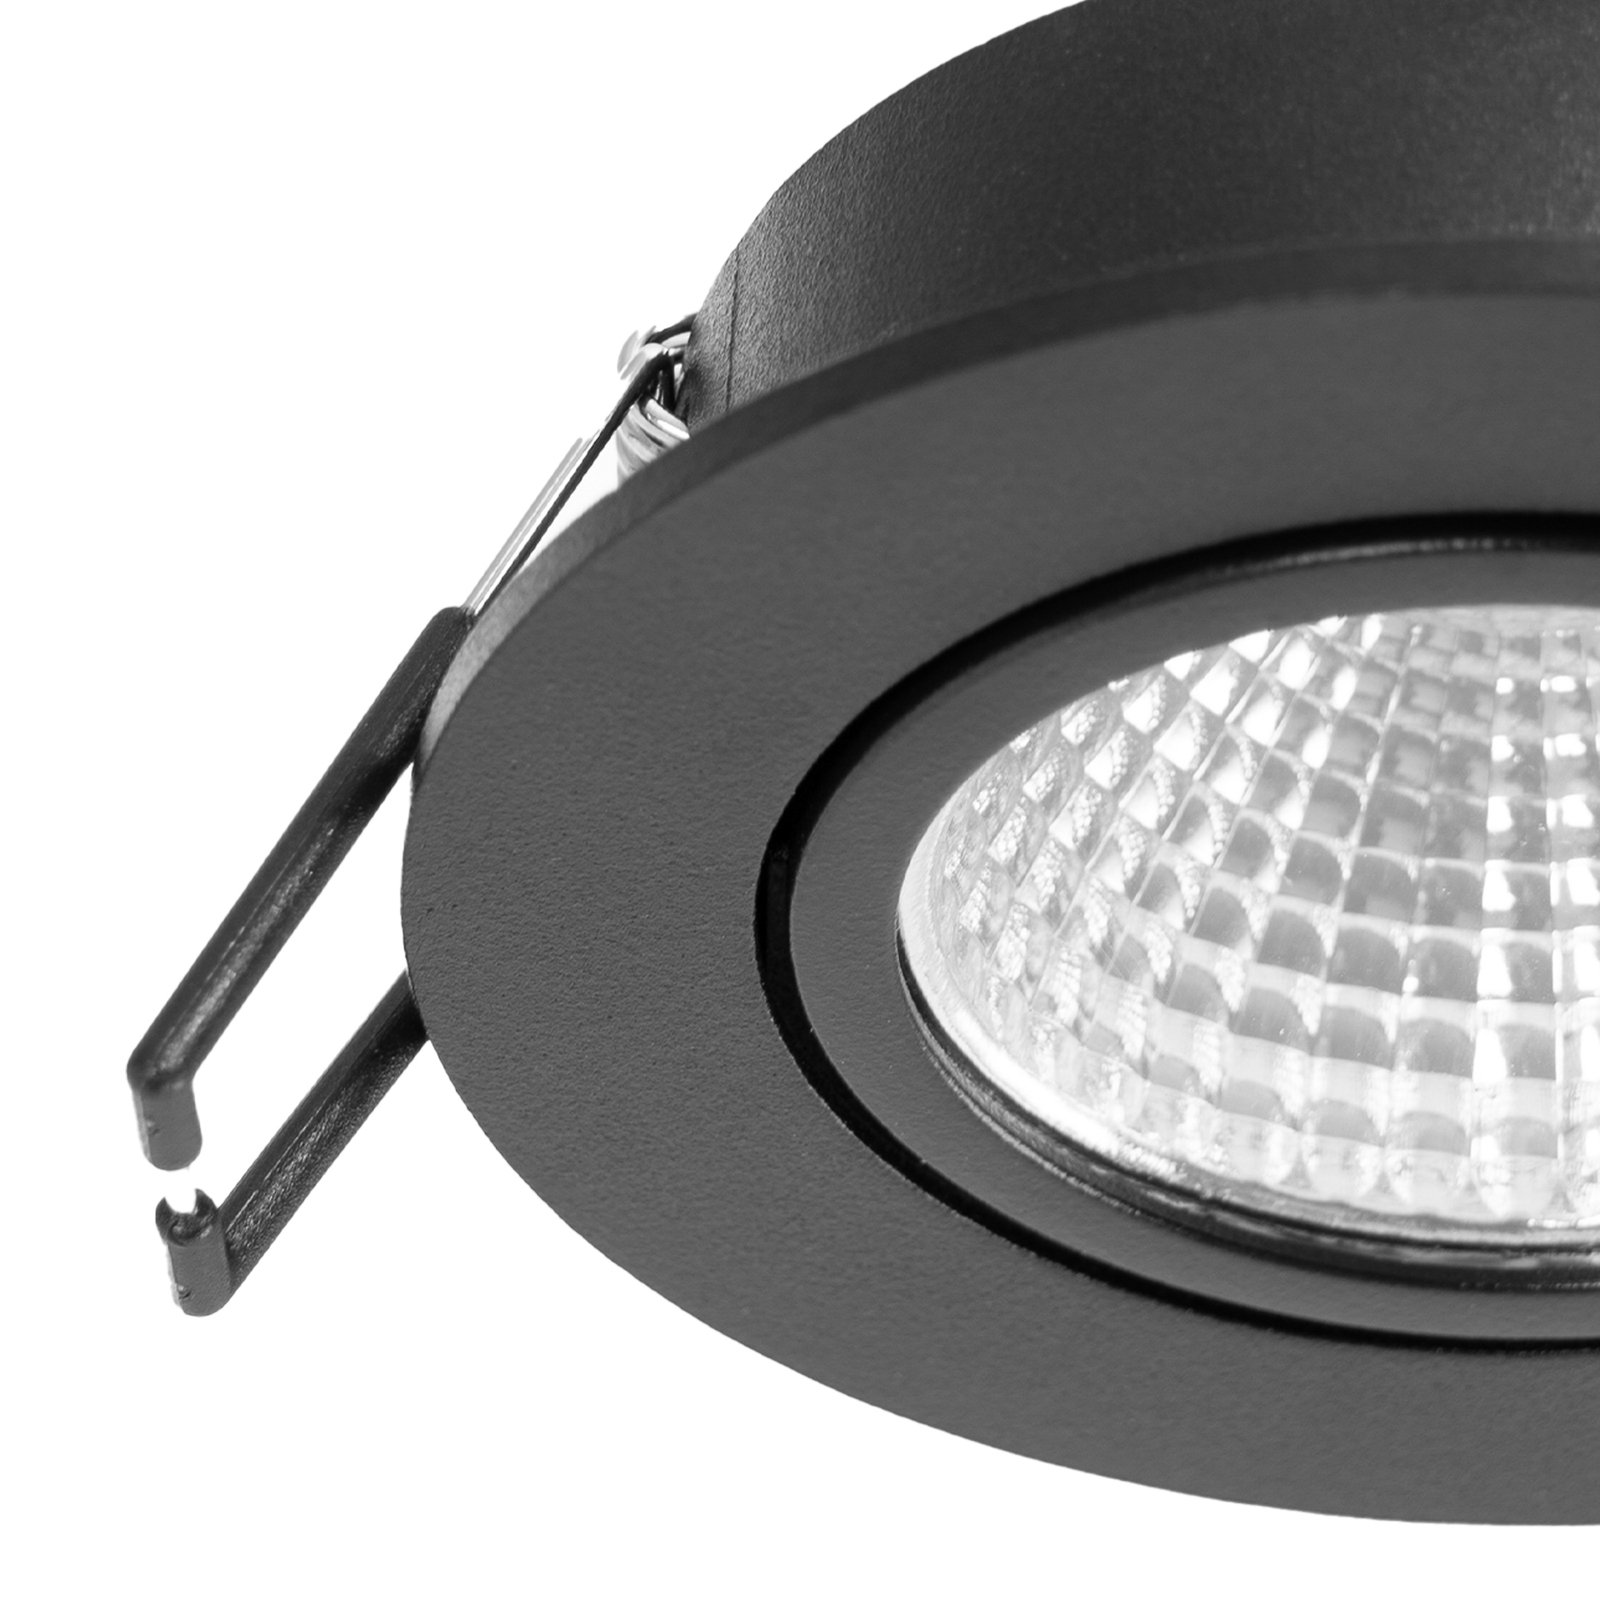 Arcchio LED-es Zarik downlight, fekete, 4,000K